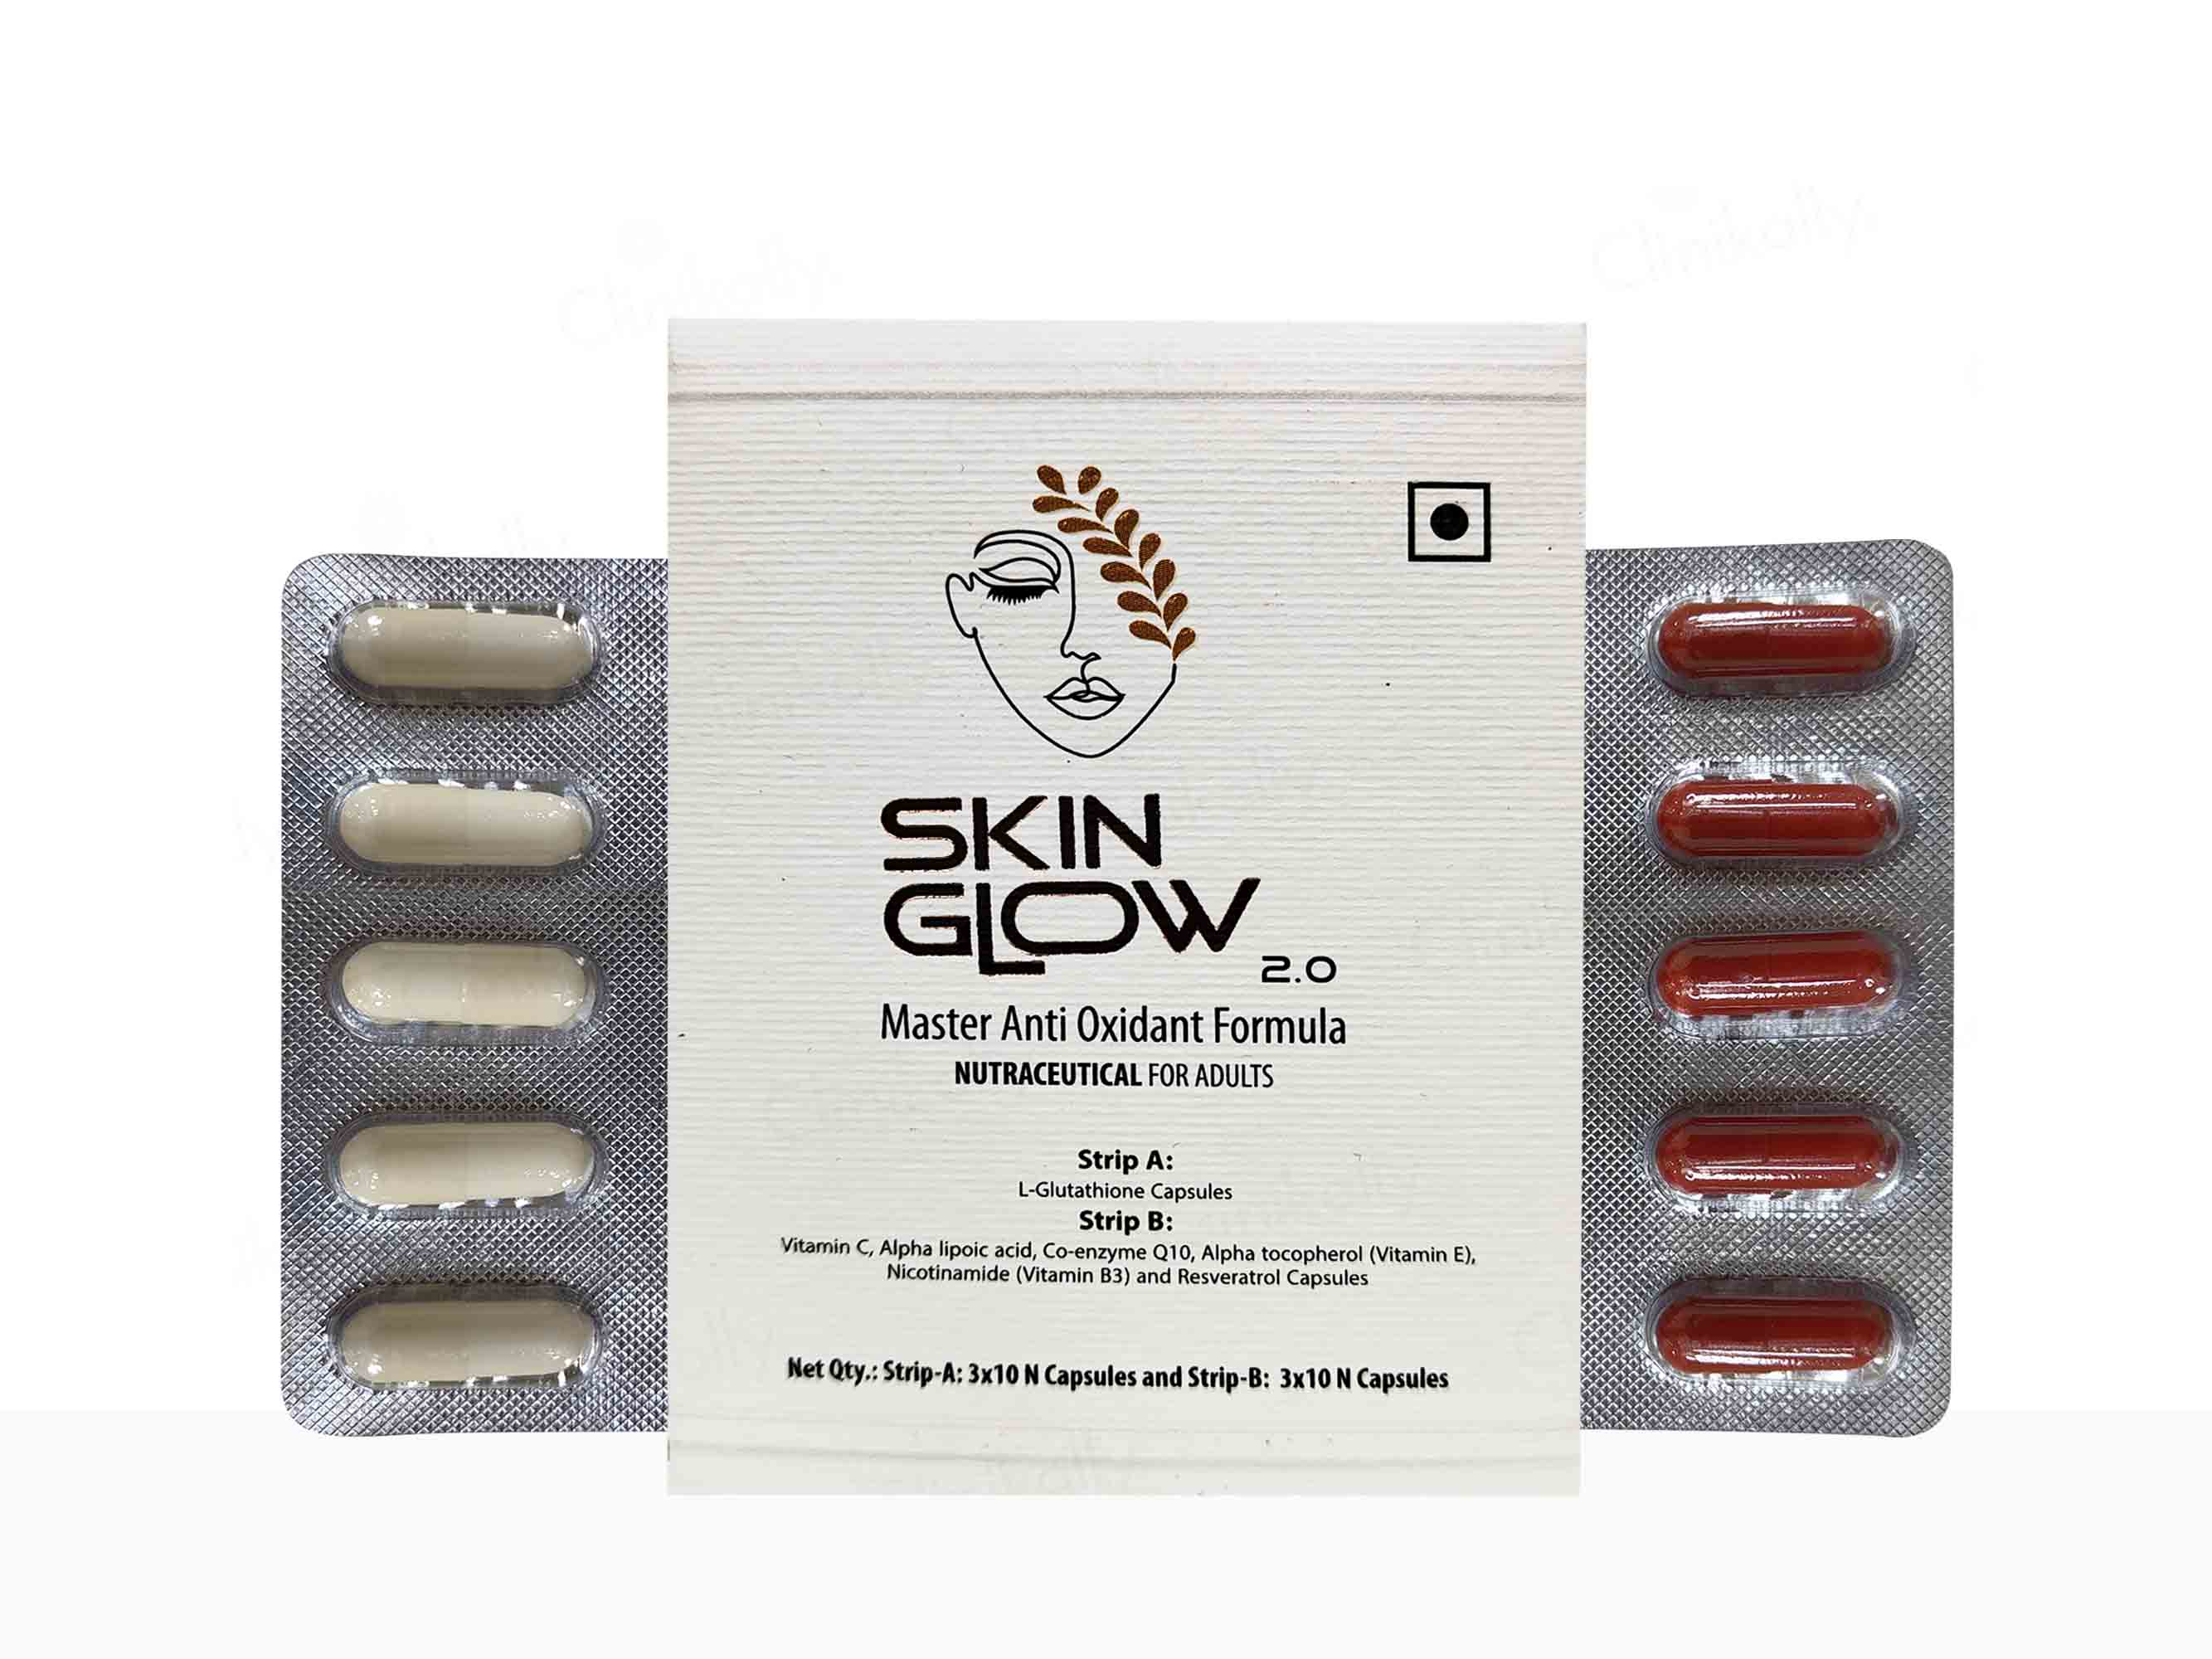 Skin Glow 2.0 Master Anti Oxidant Formula Nutraceutical Capsule For Adults